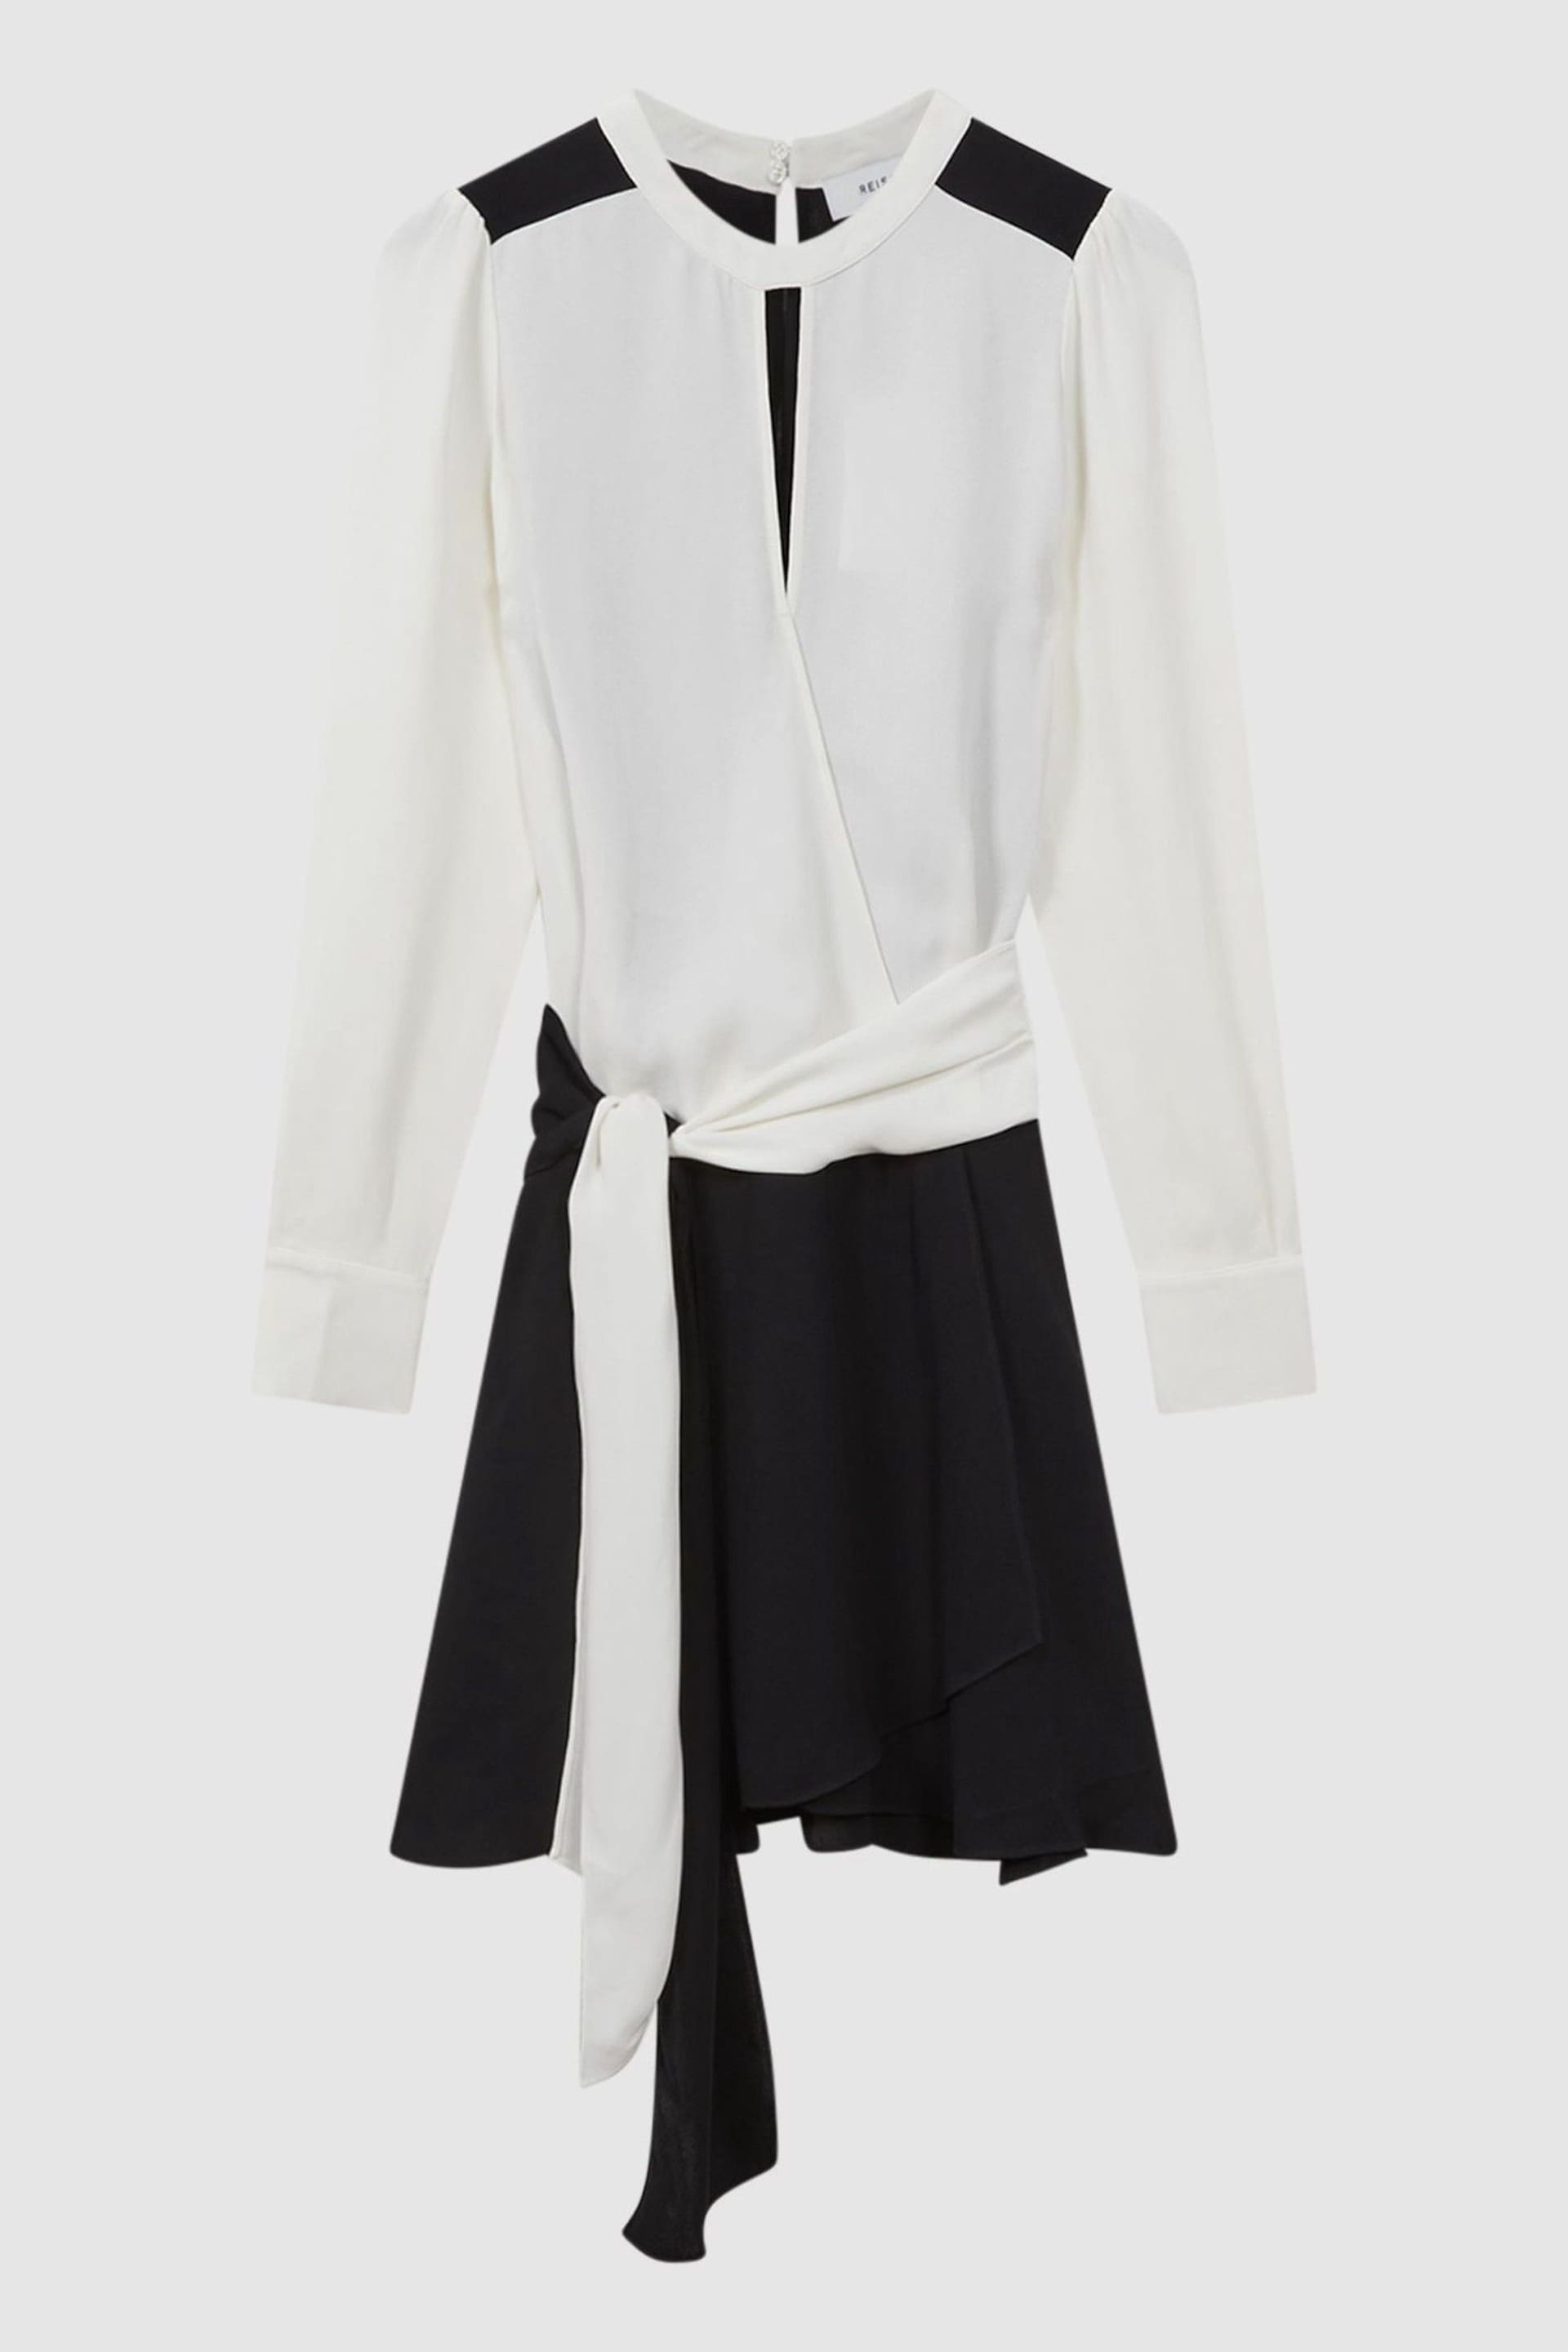 Reiss Ivory/Black Sadie Colourblock Belted Mini Dress - Image 2 of 4